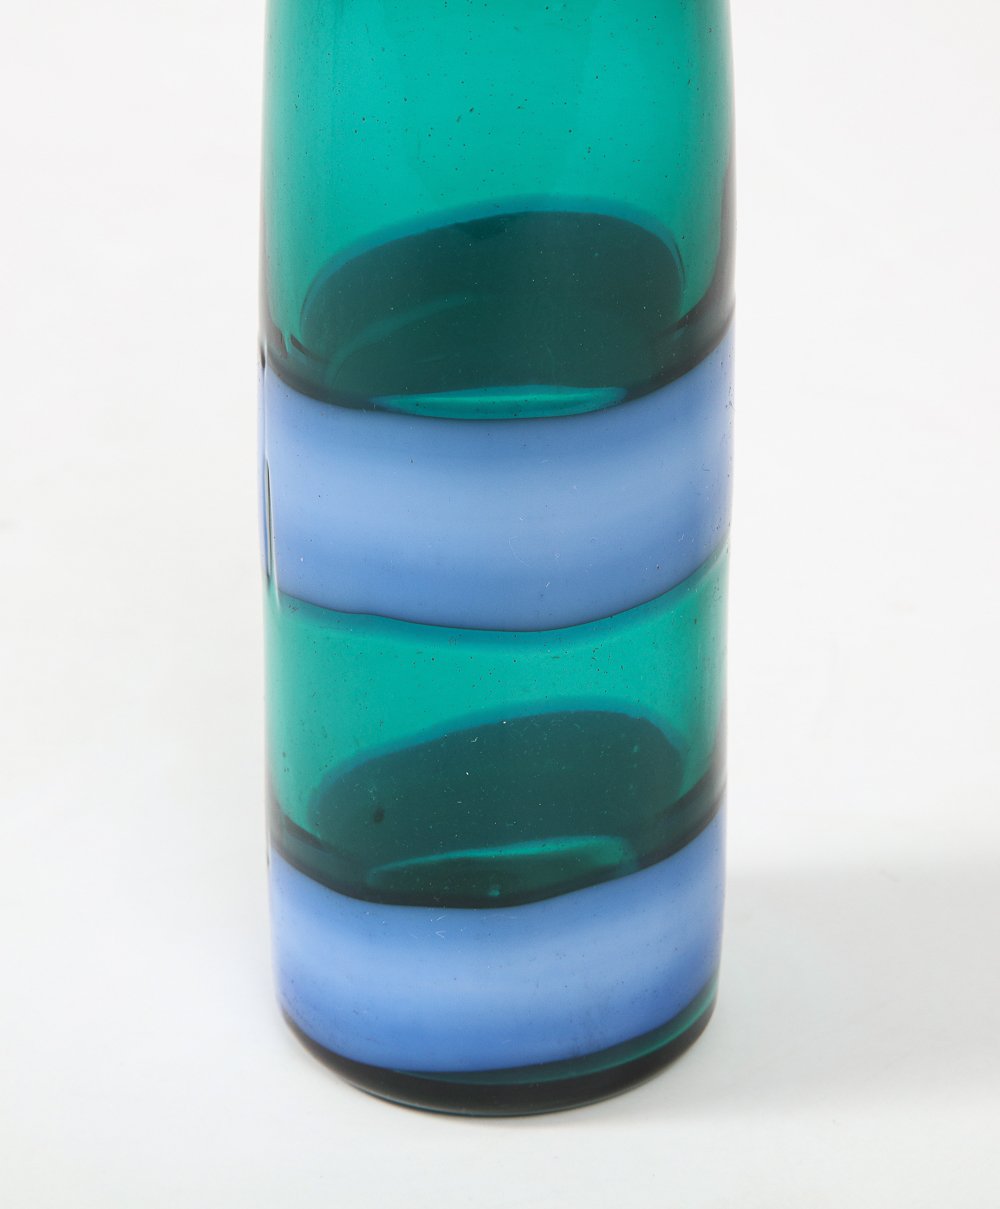 Fasce Orizzontali Bottle Model #4399 by Fulvio Bianconi for Venini